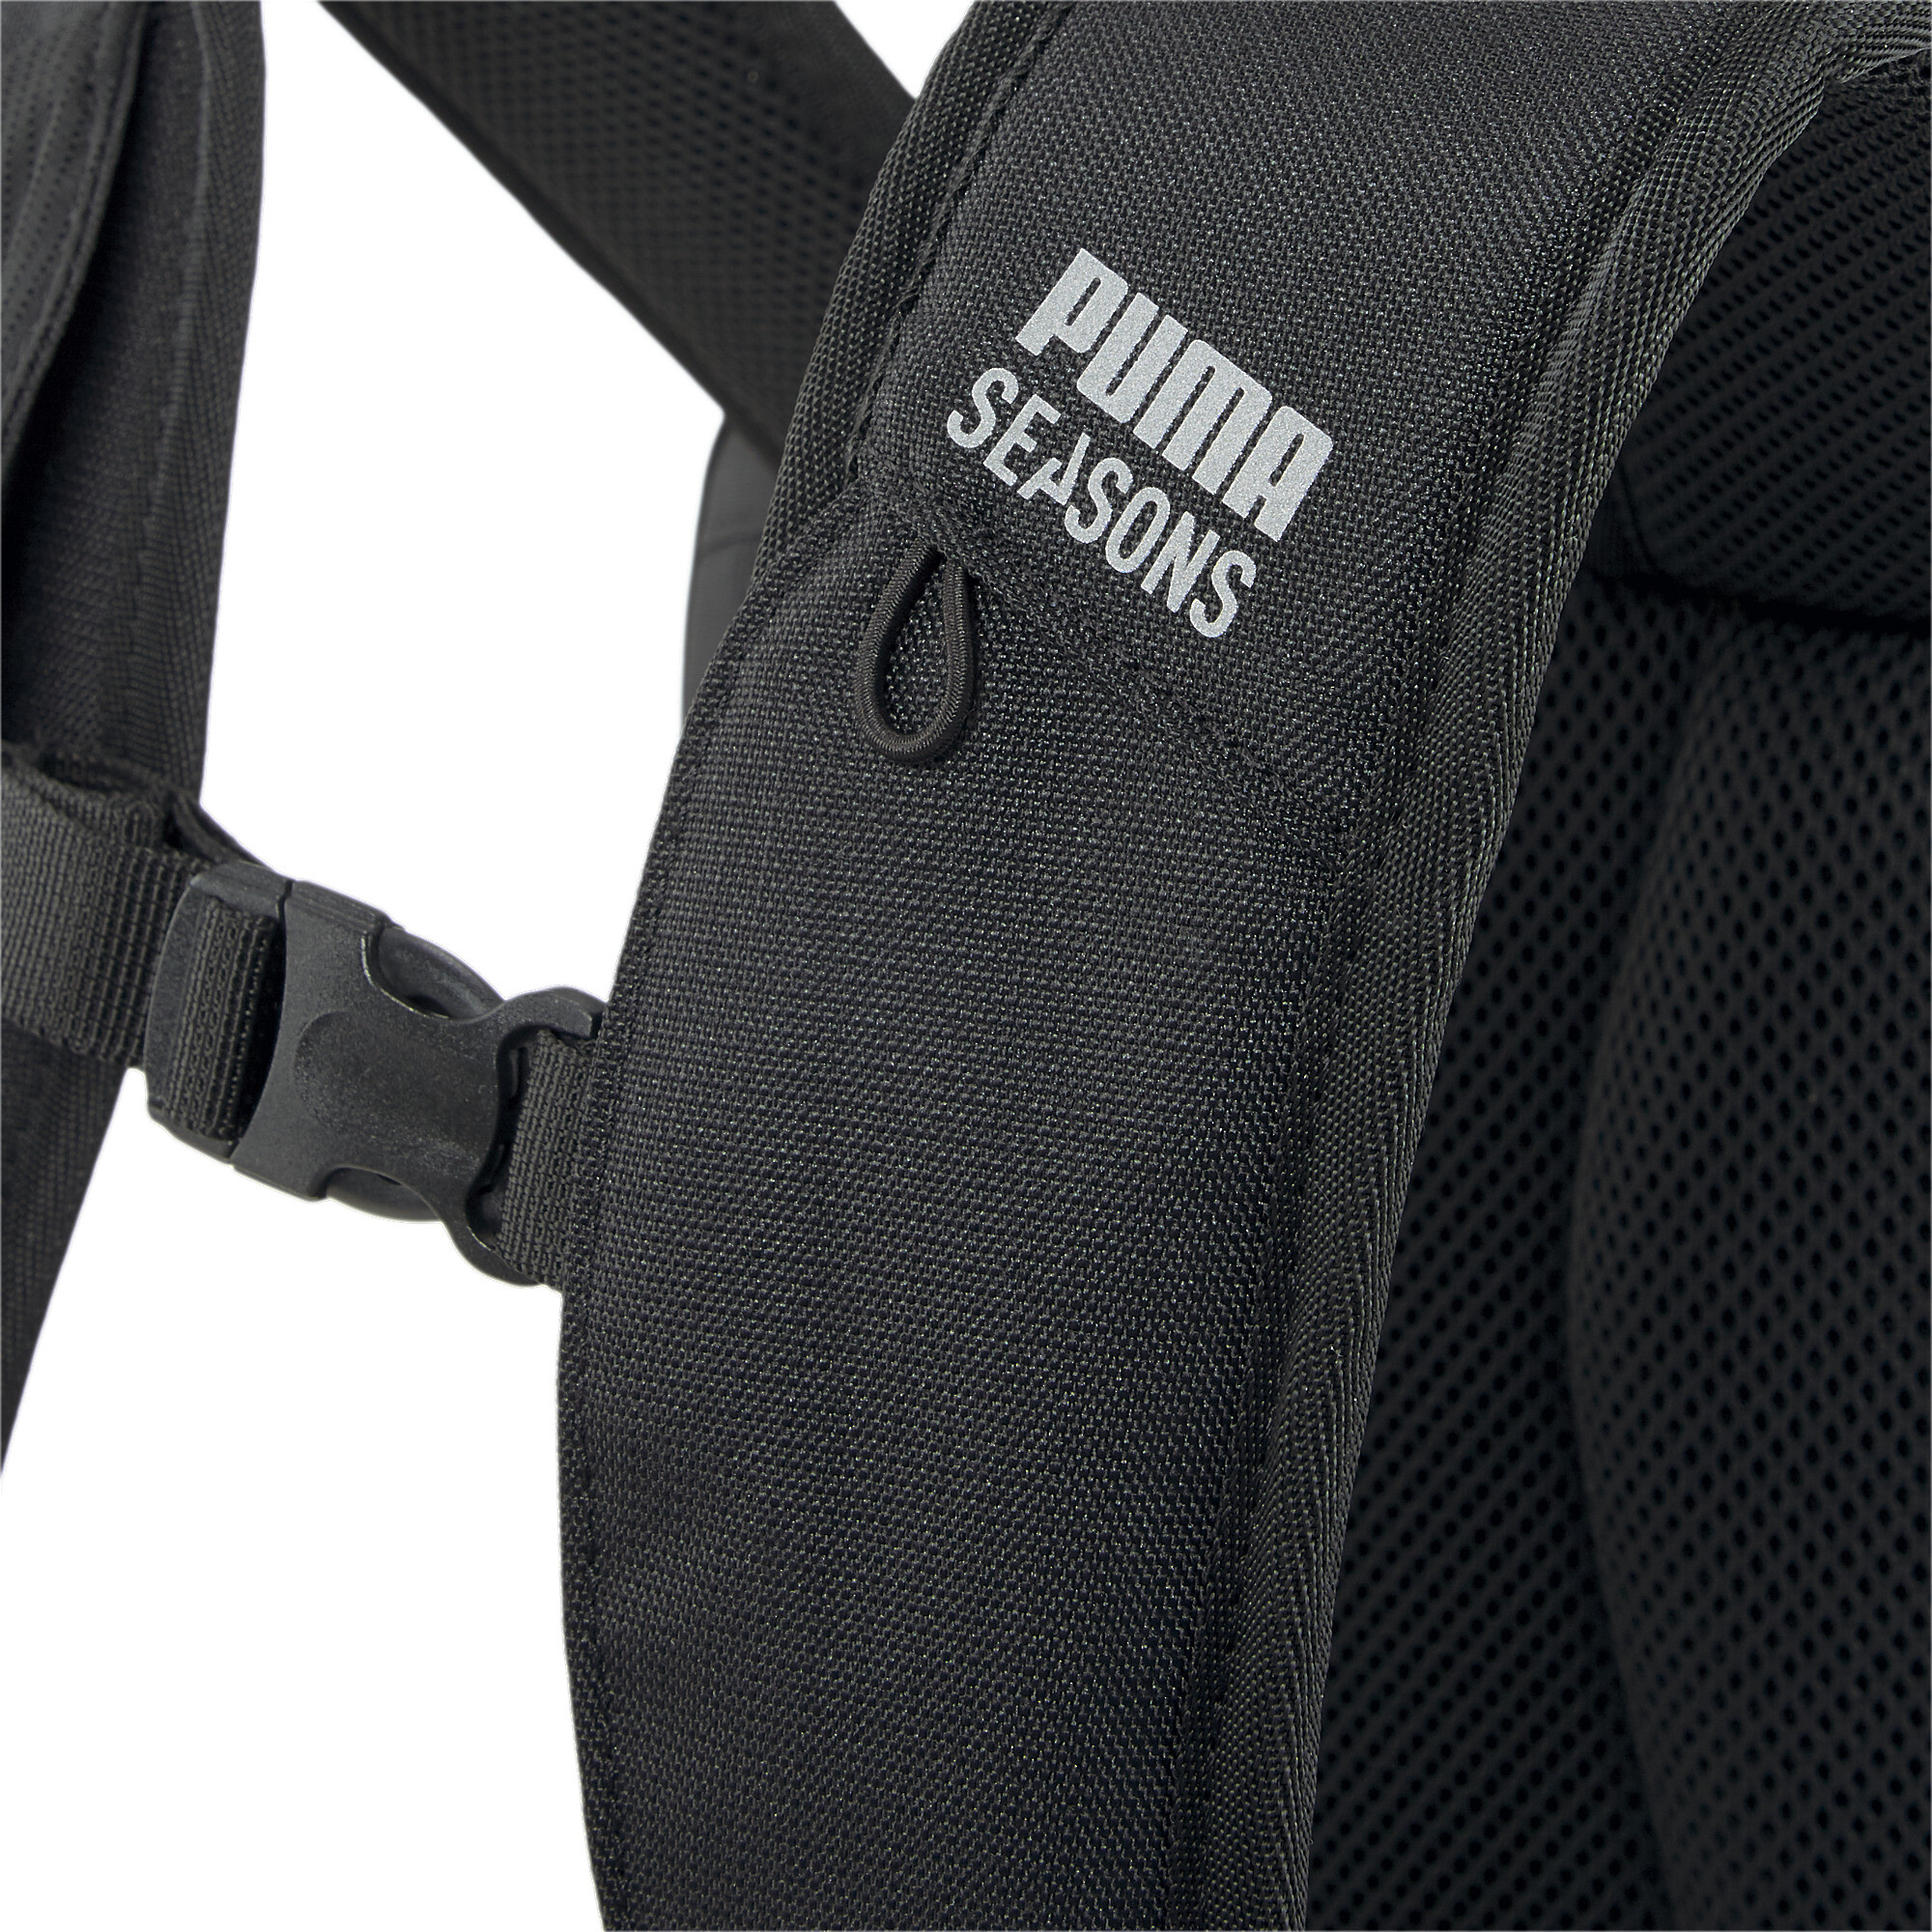 Puma SEASONS Hiking Backpack 28L, Black, Accessories